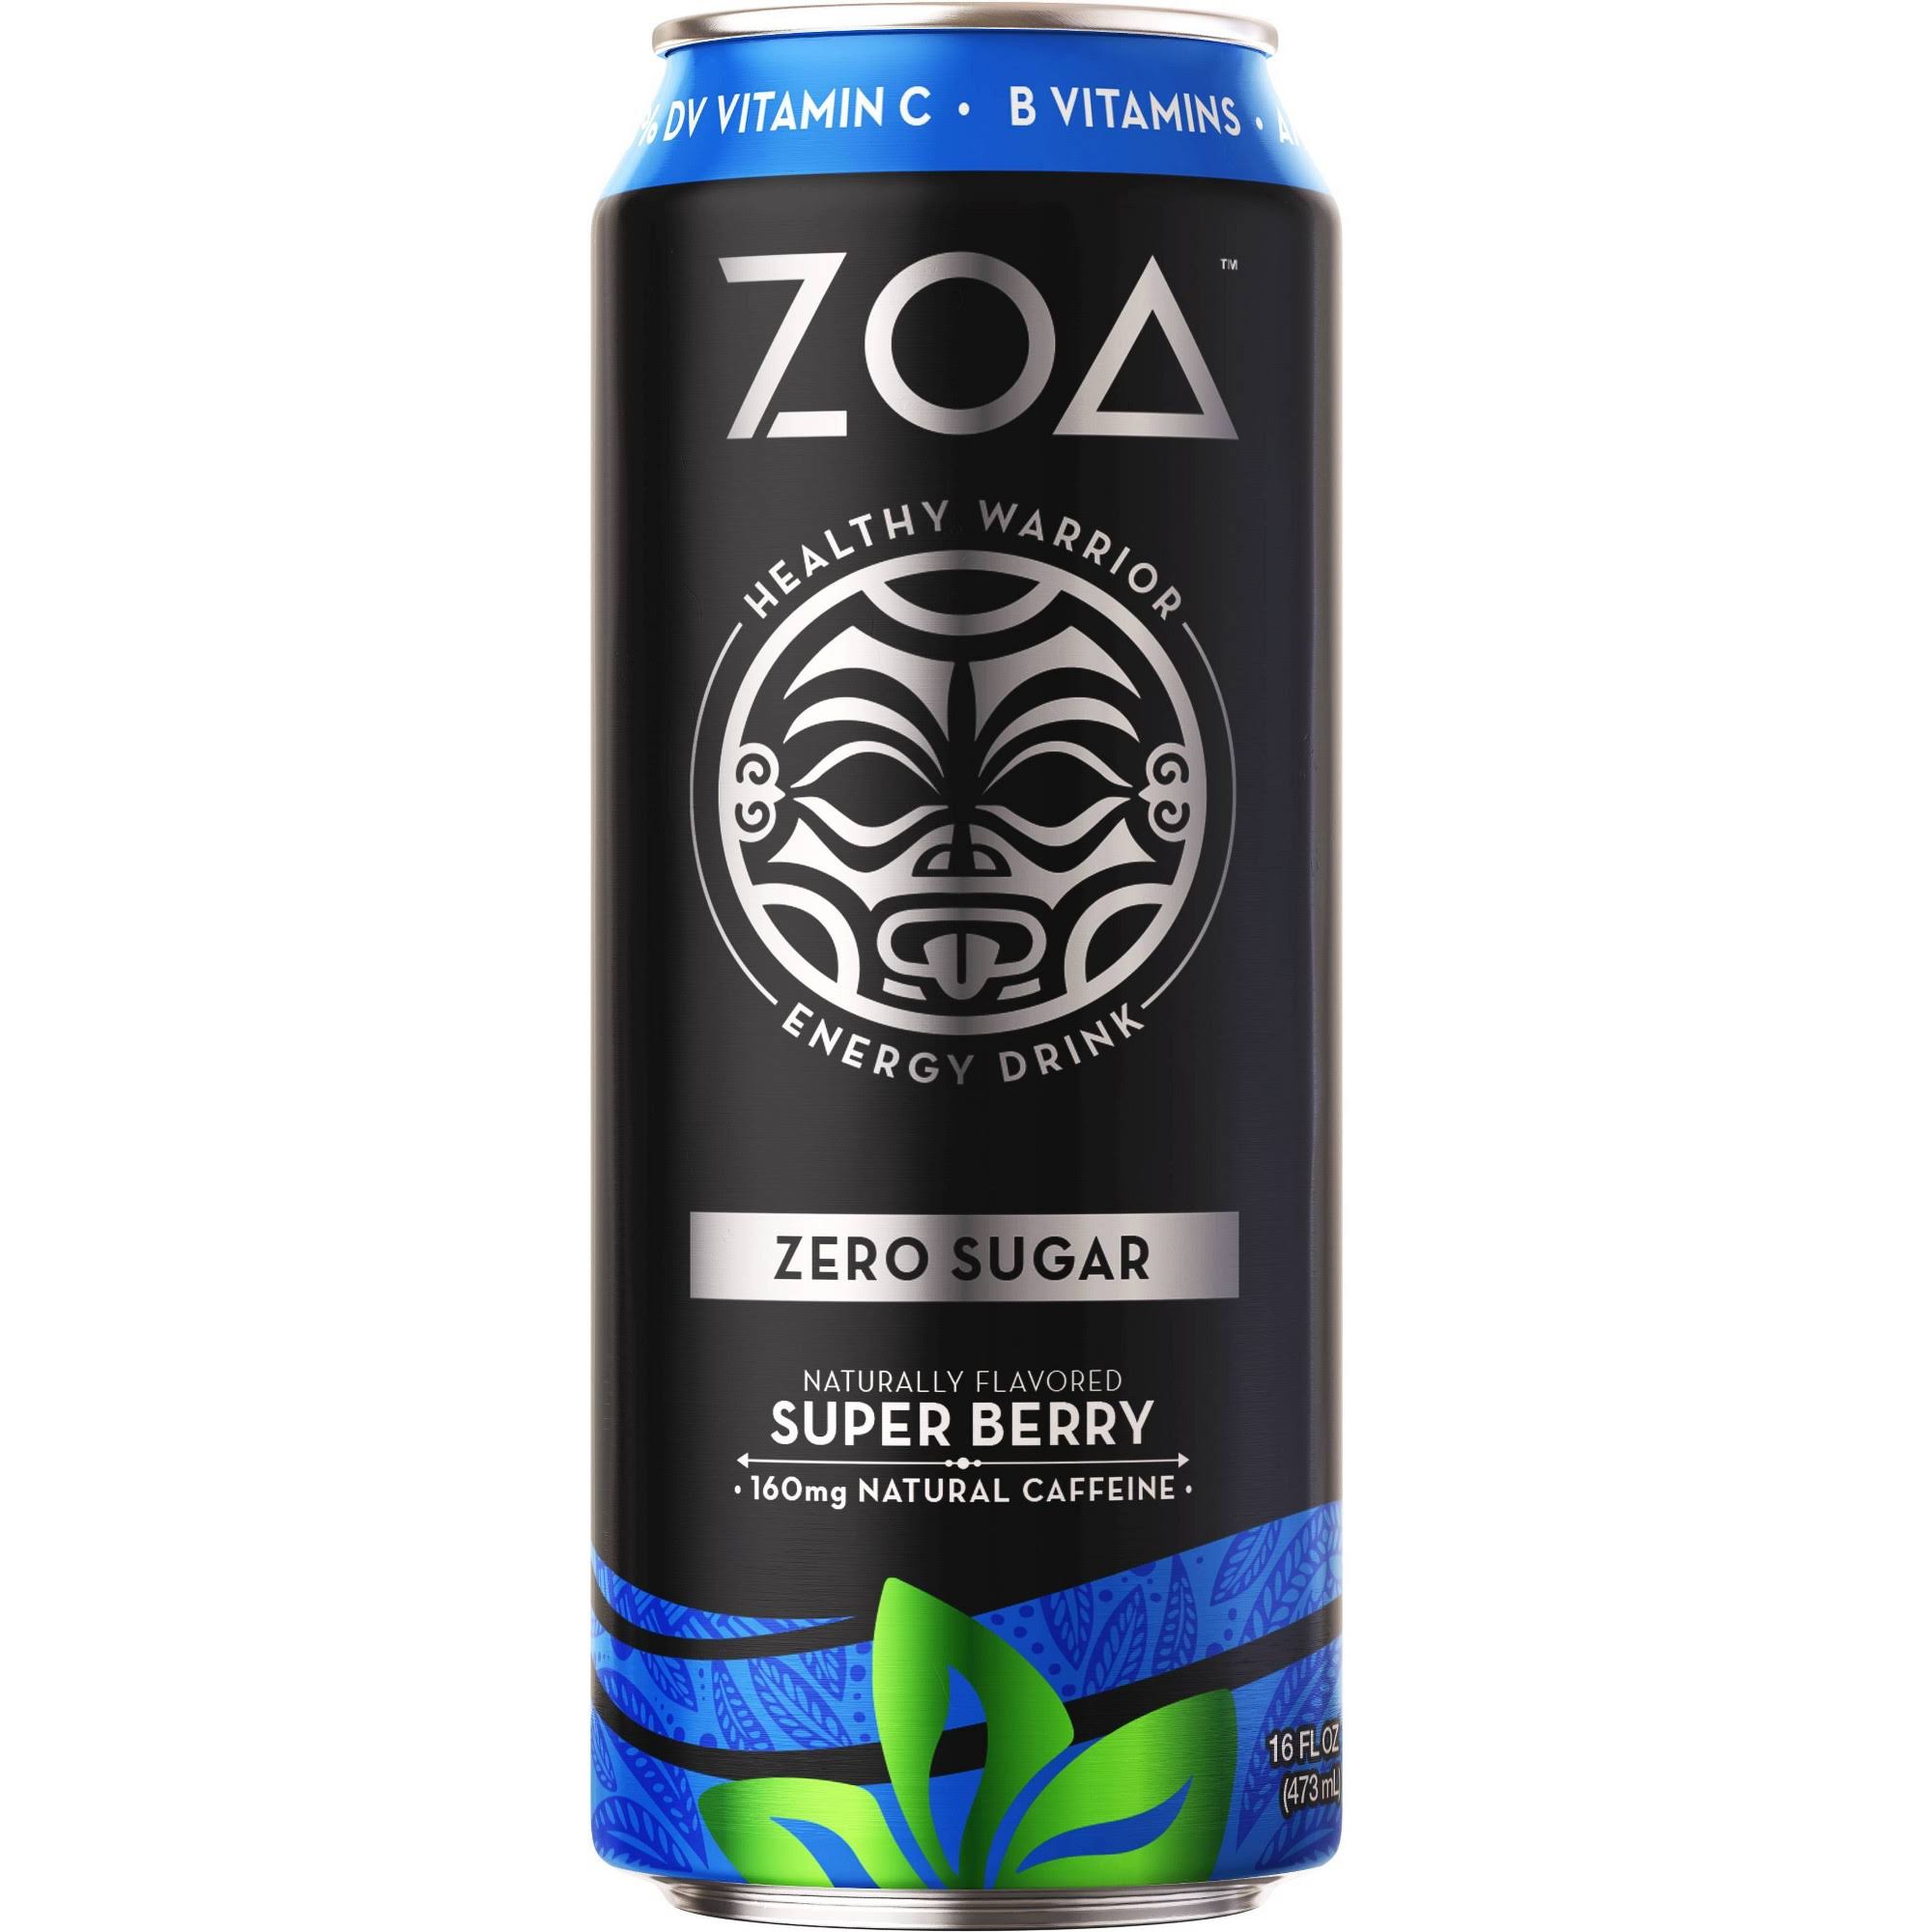 Zoa Energy Drink, Zero Sugar, Super Berry - 16 fl oz